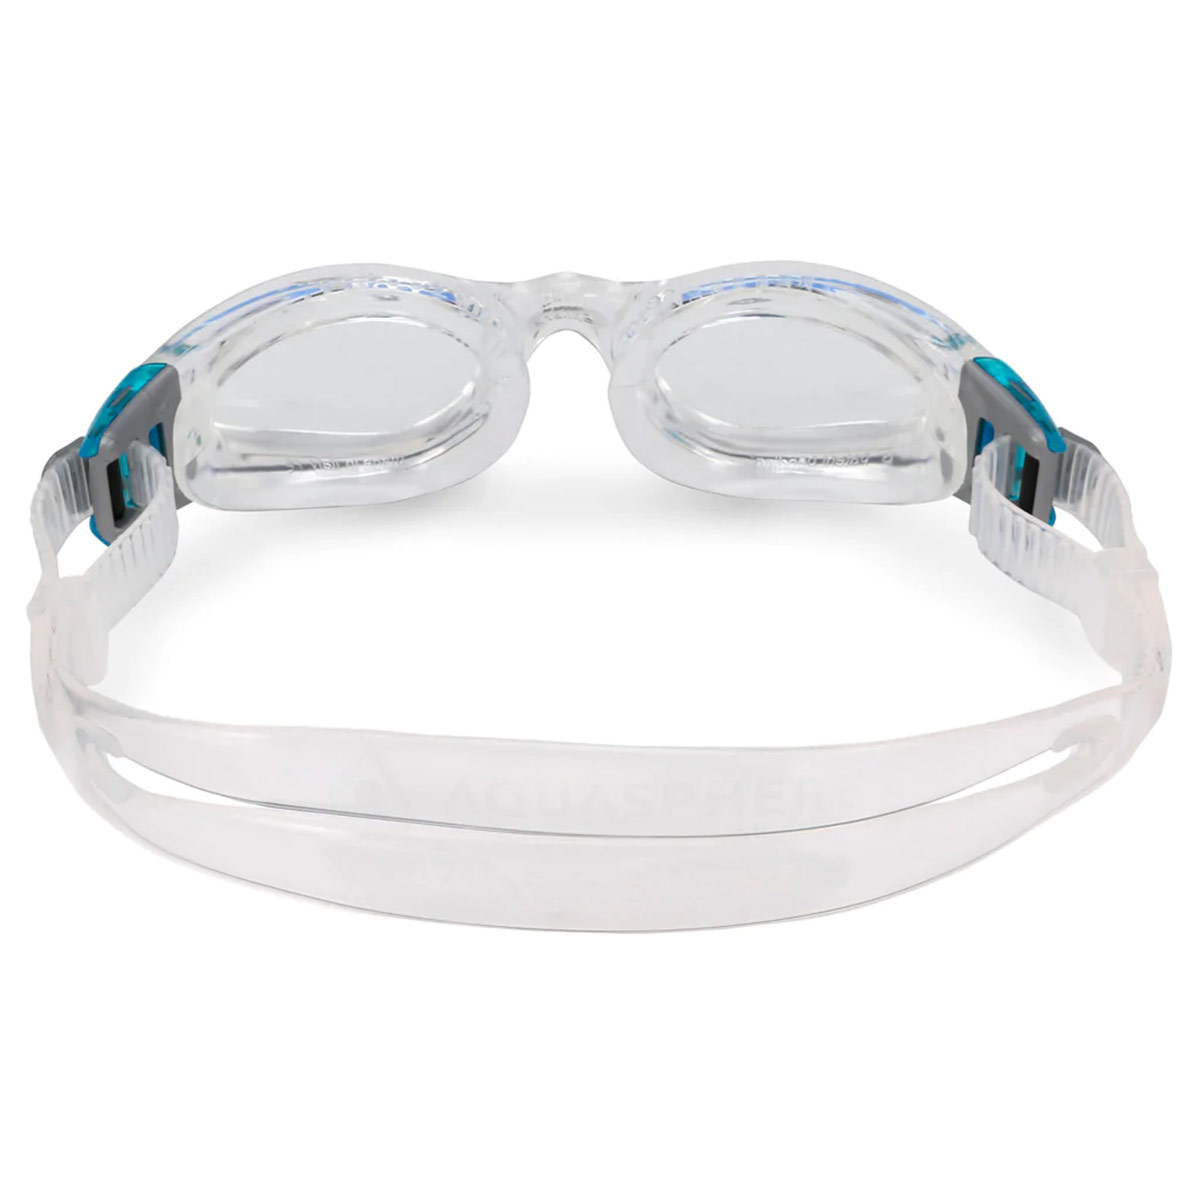 Aqua Sphere Kaiman Compact Clear Lens Goggles - Transparent/Blue